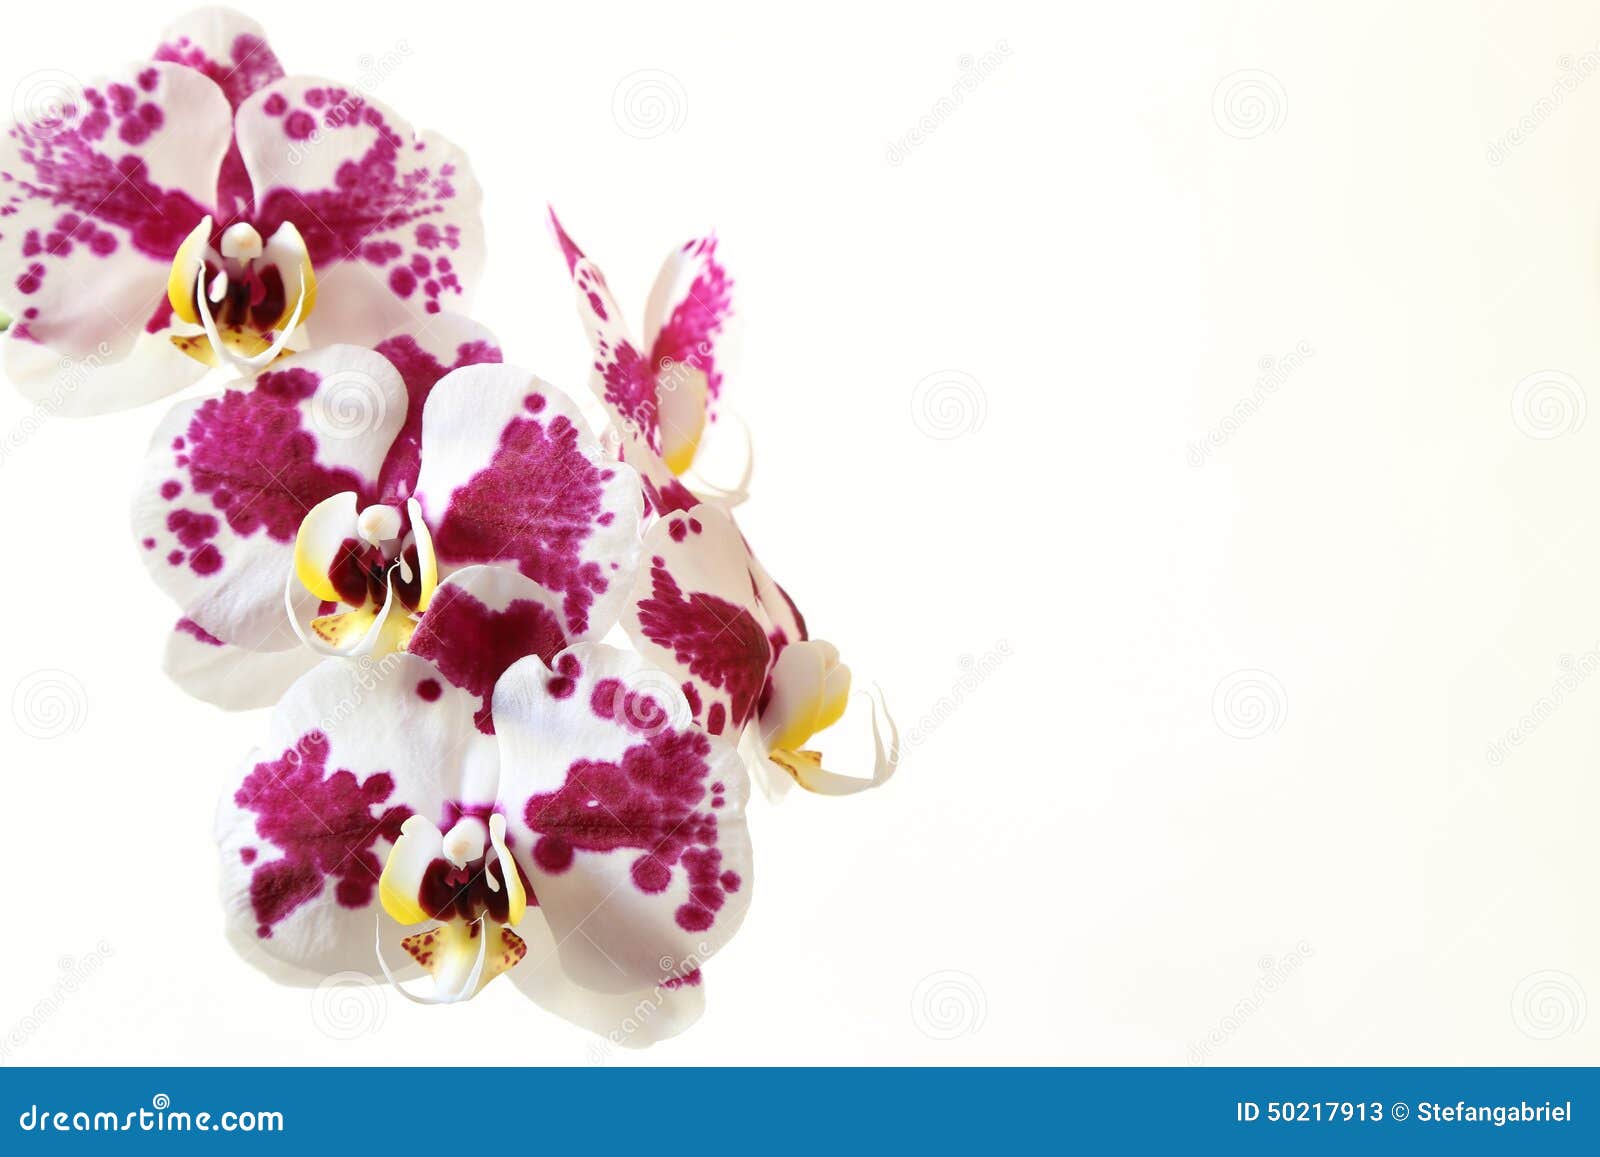 natural purple orchids